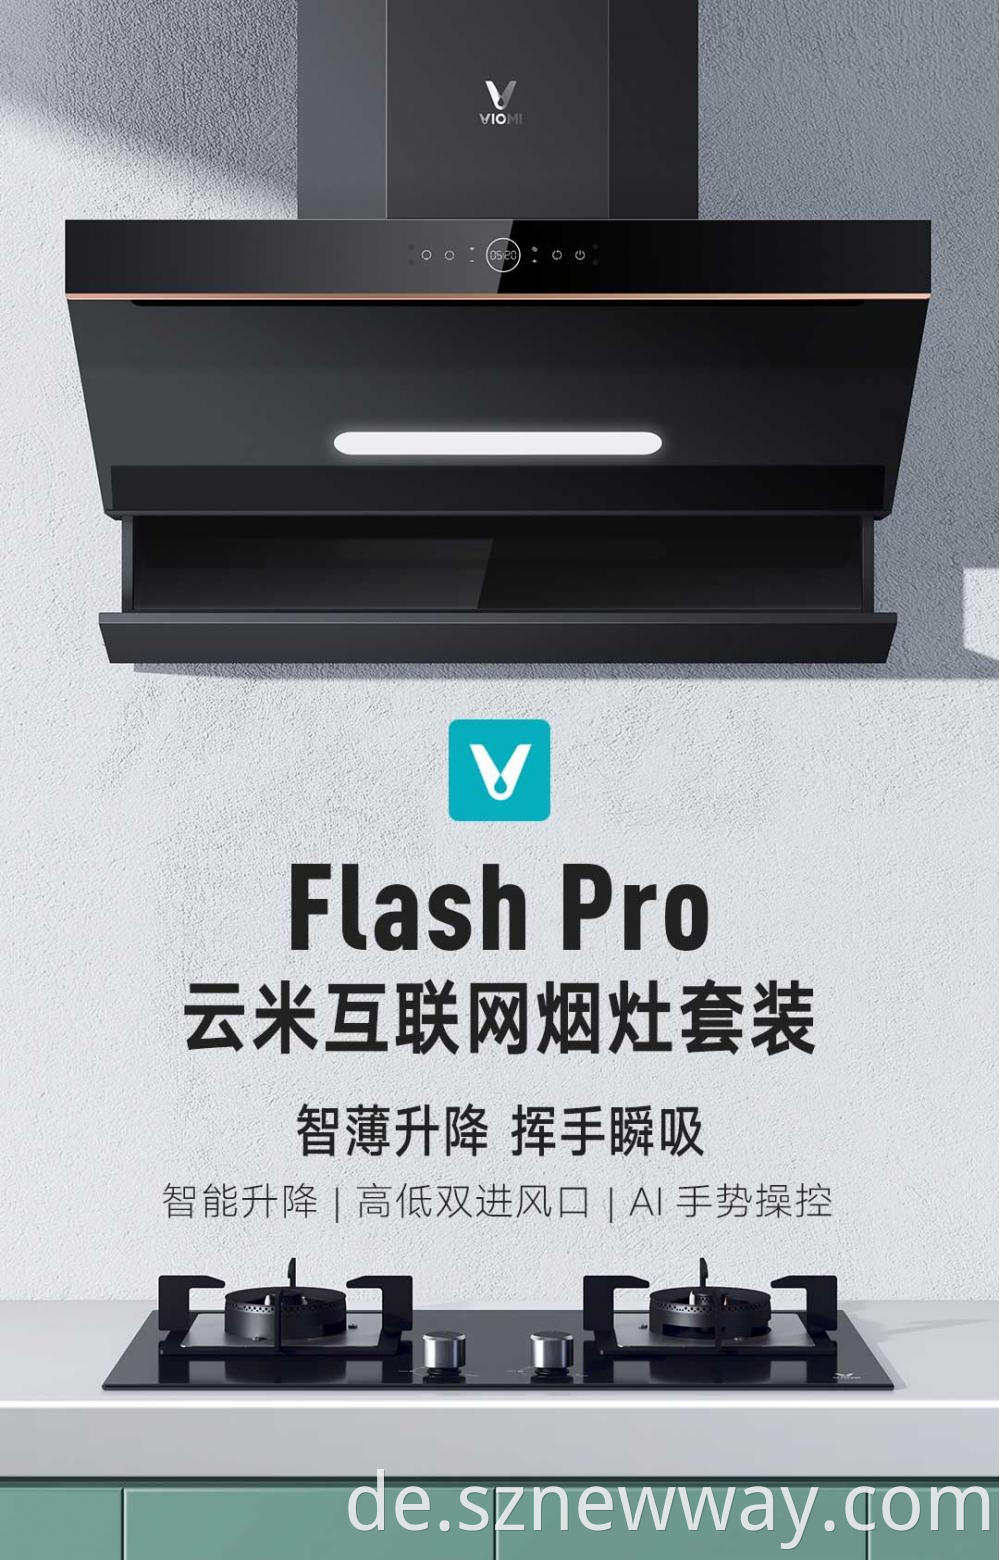 Viomi Flash Pro